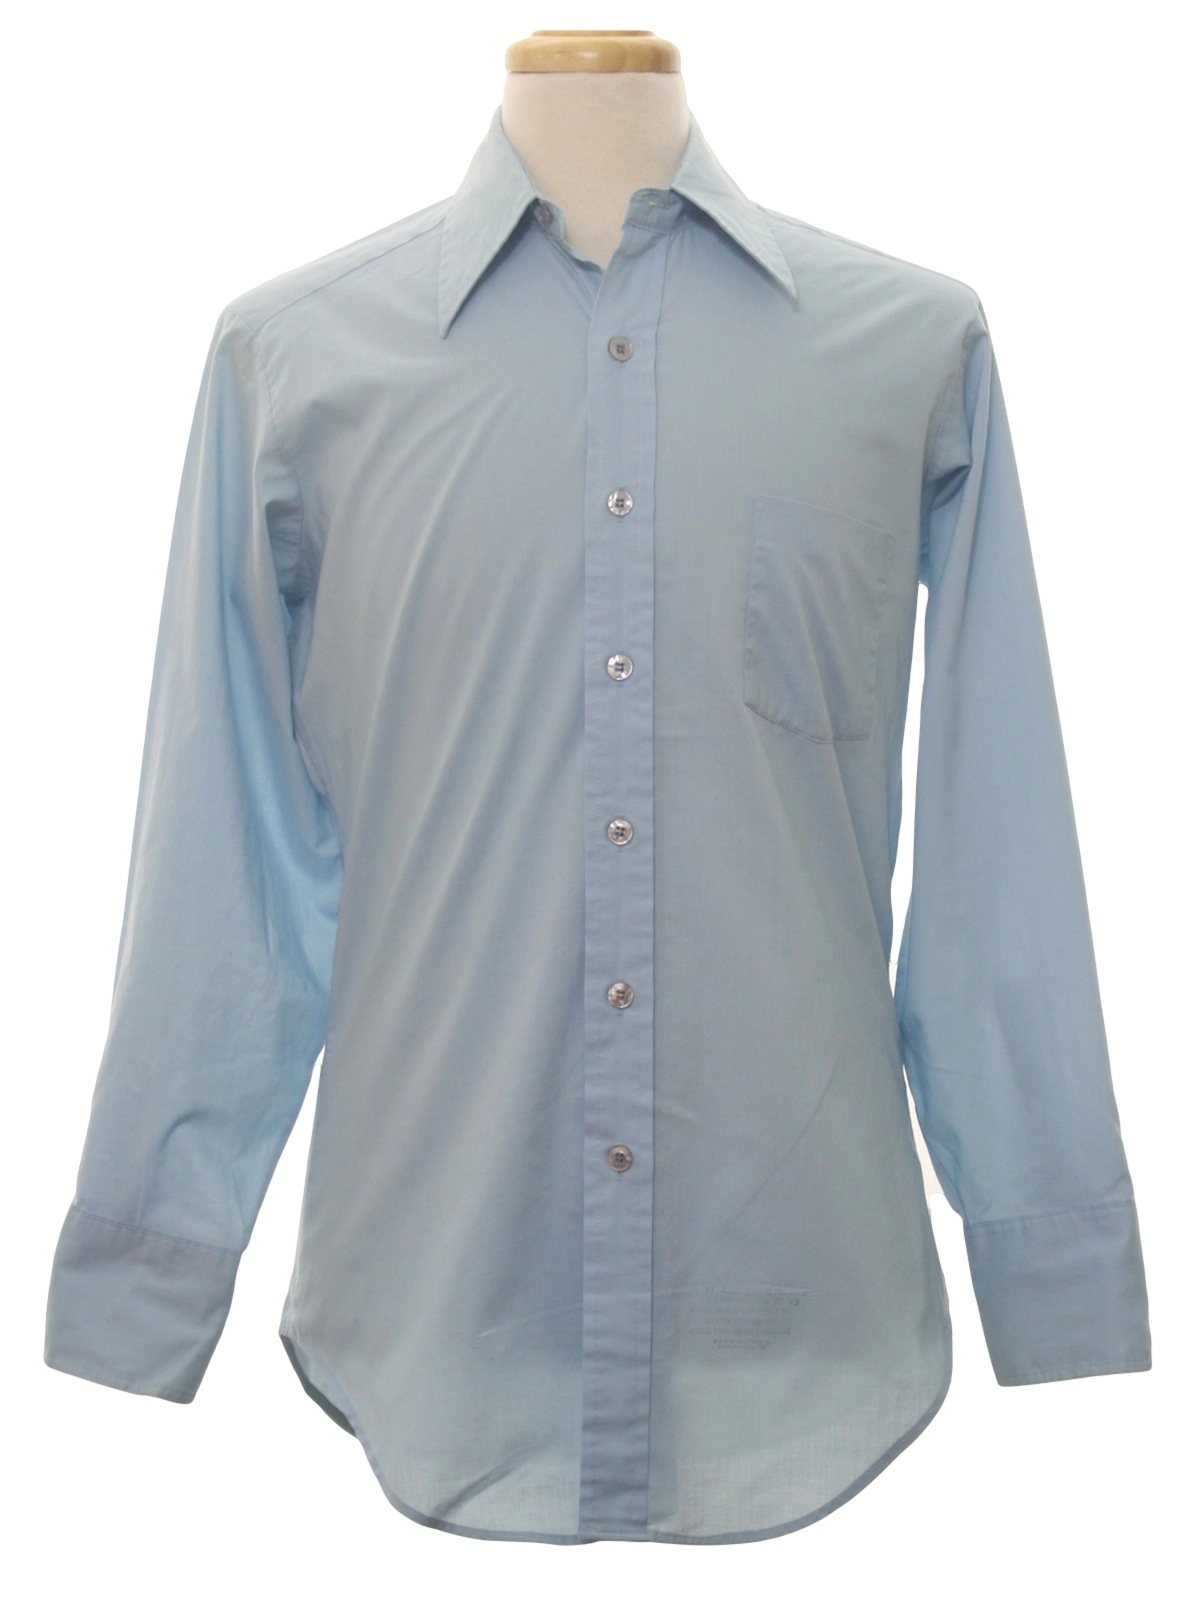 Retro 1970's Shirt (Sears) : 70s -Sears- Mens light blue background ...